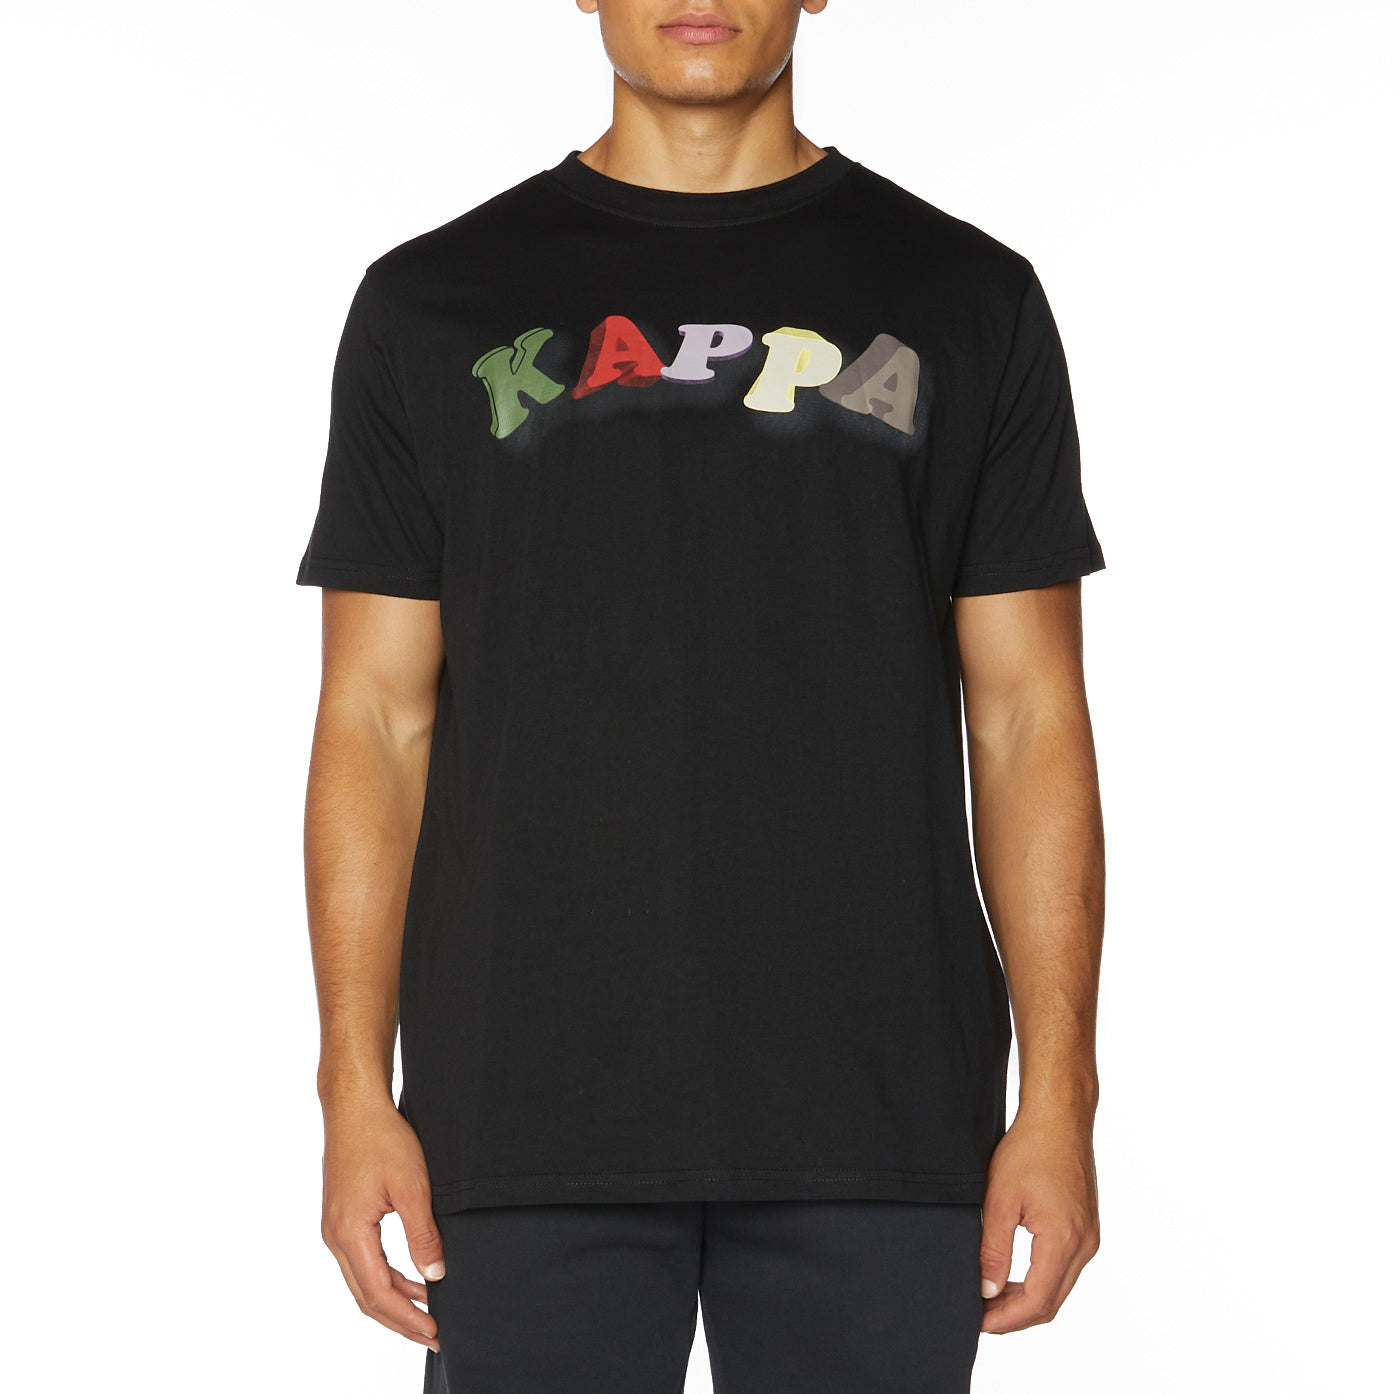 Authentic T-Shirt Black – Kappa Wood USA -